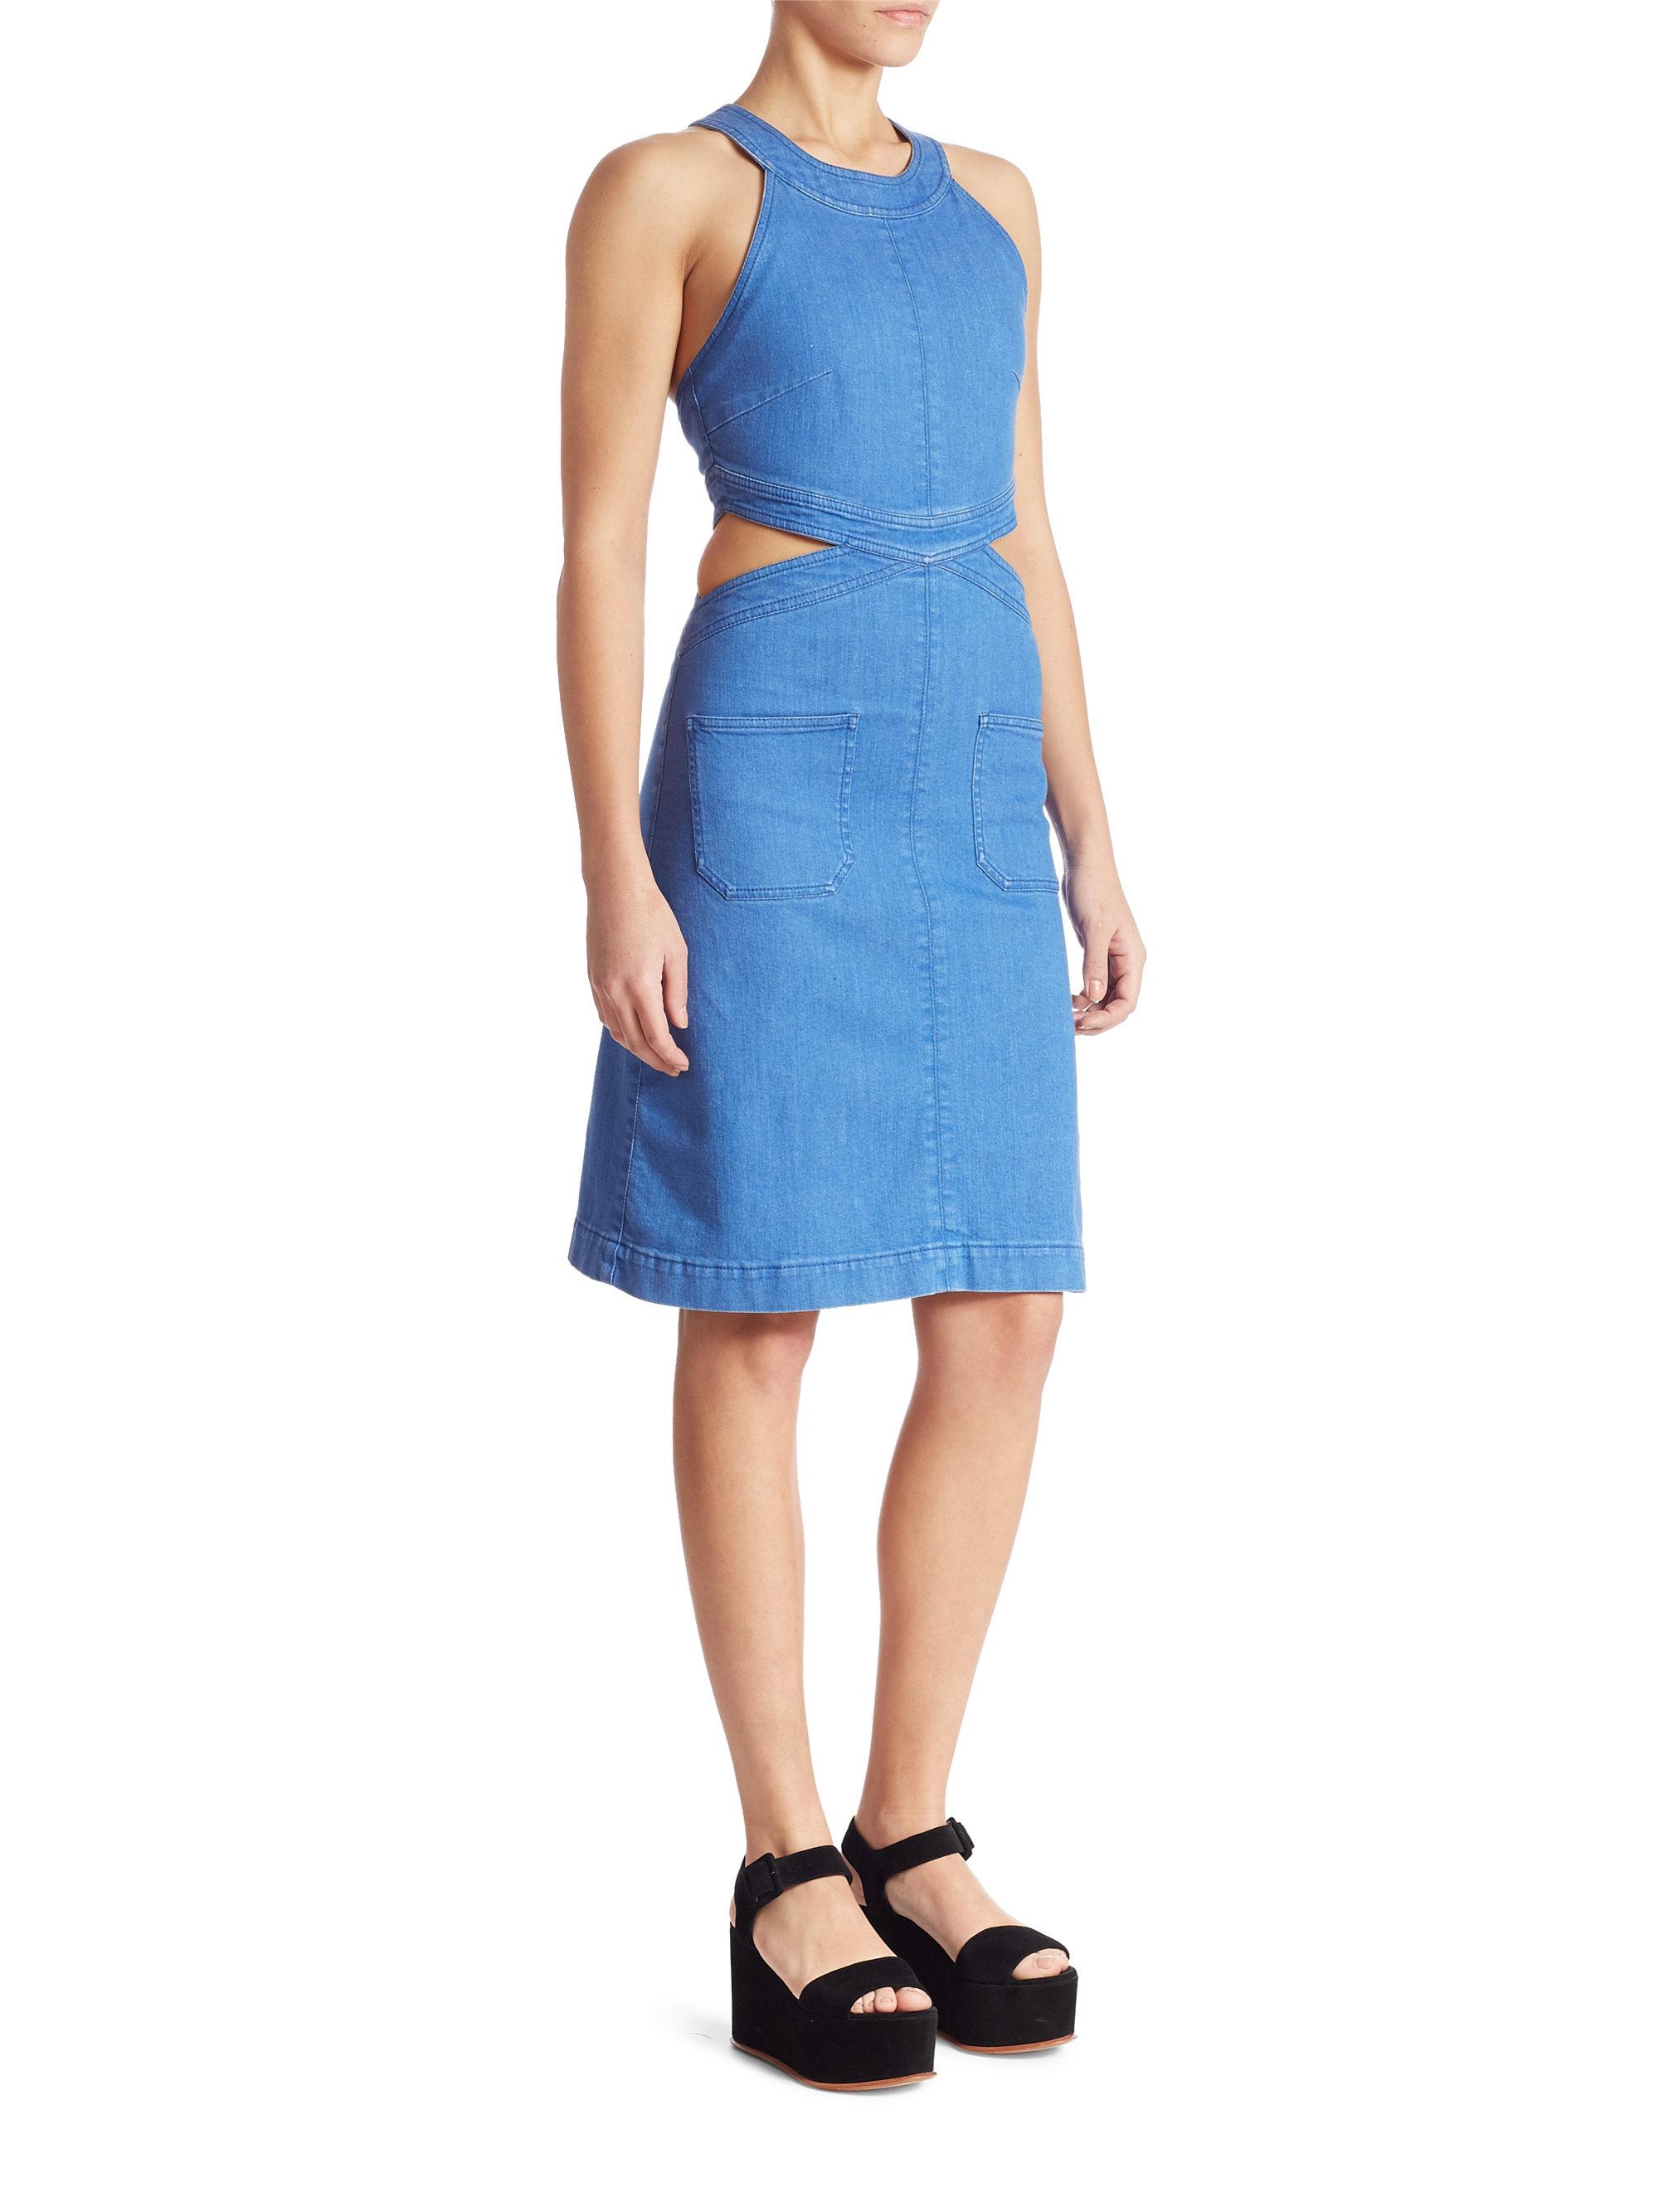 Stella McCartney Cutout Waist Denim Dress in Sapphire (Blue) - Lyst